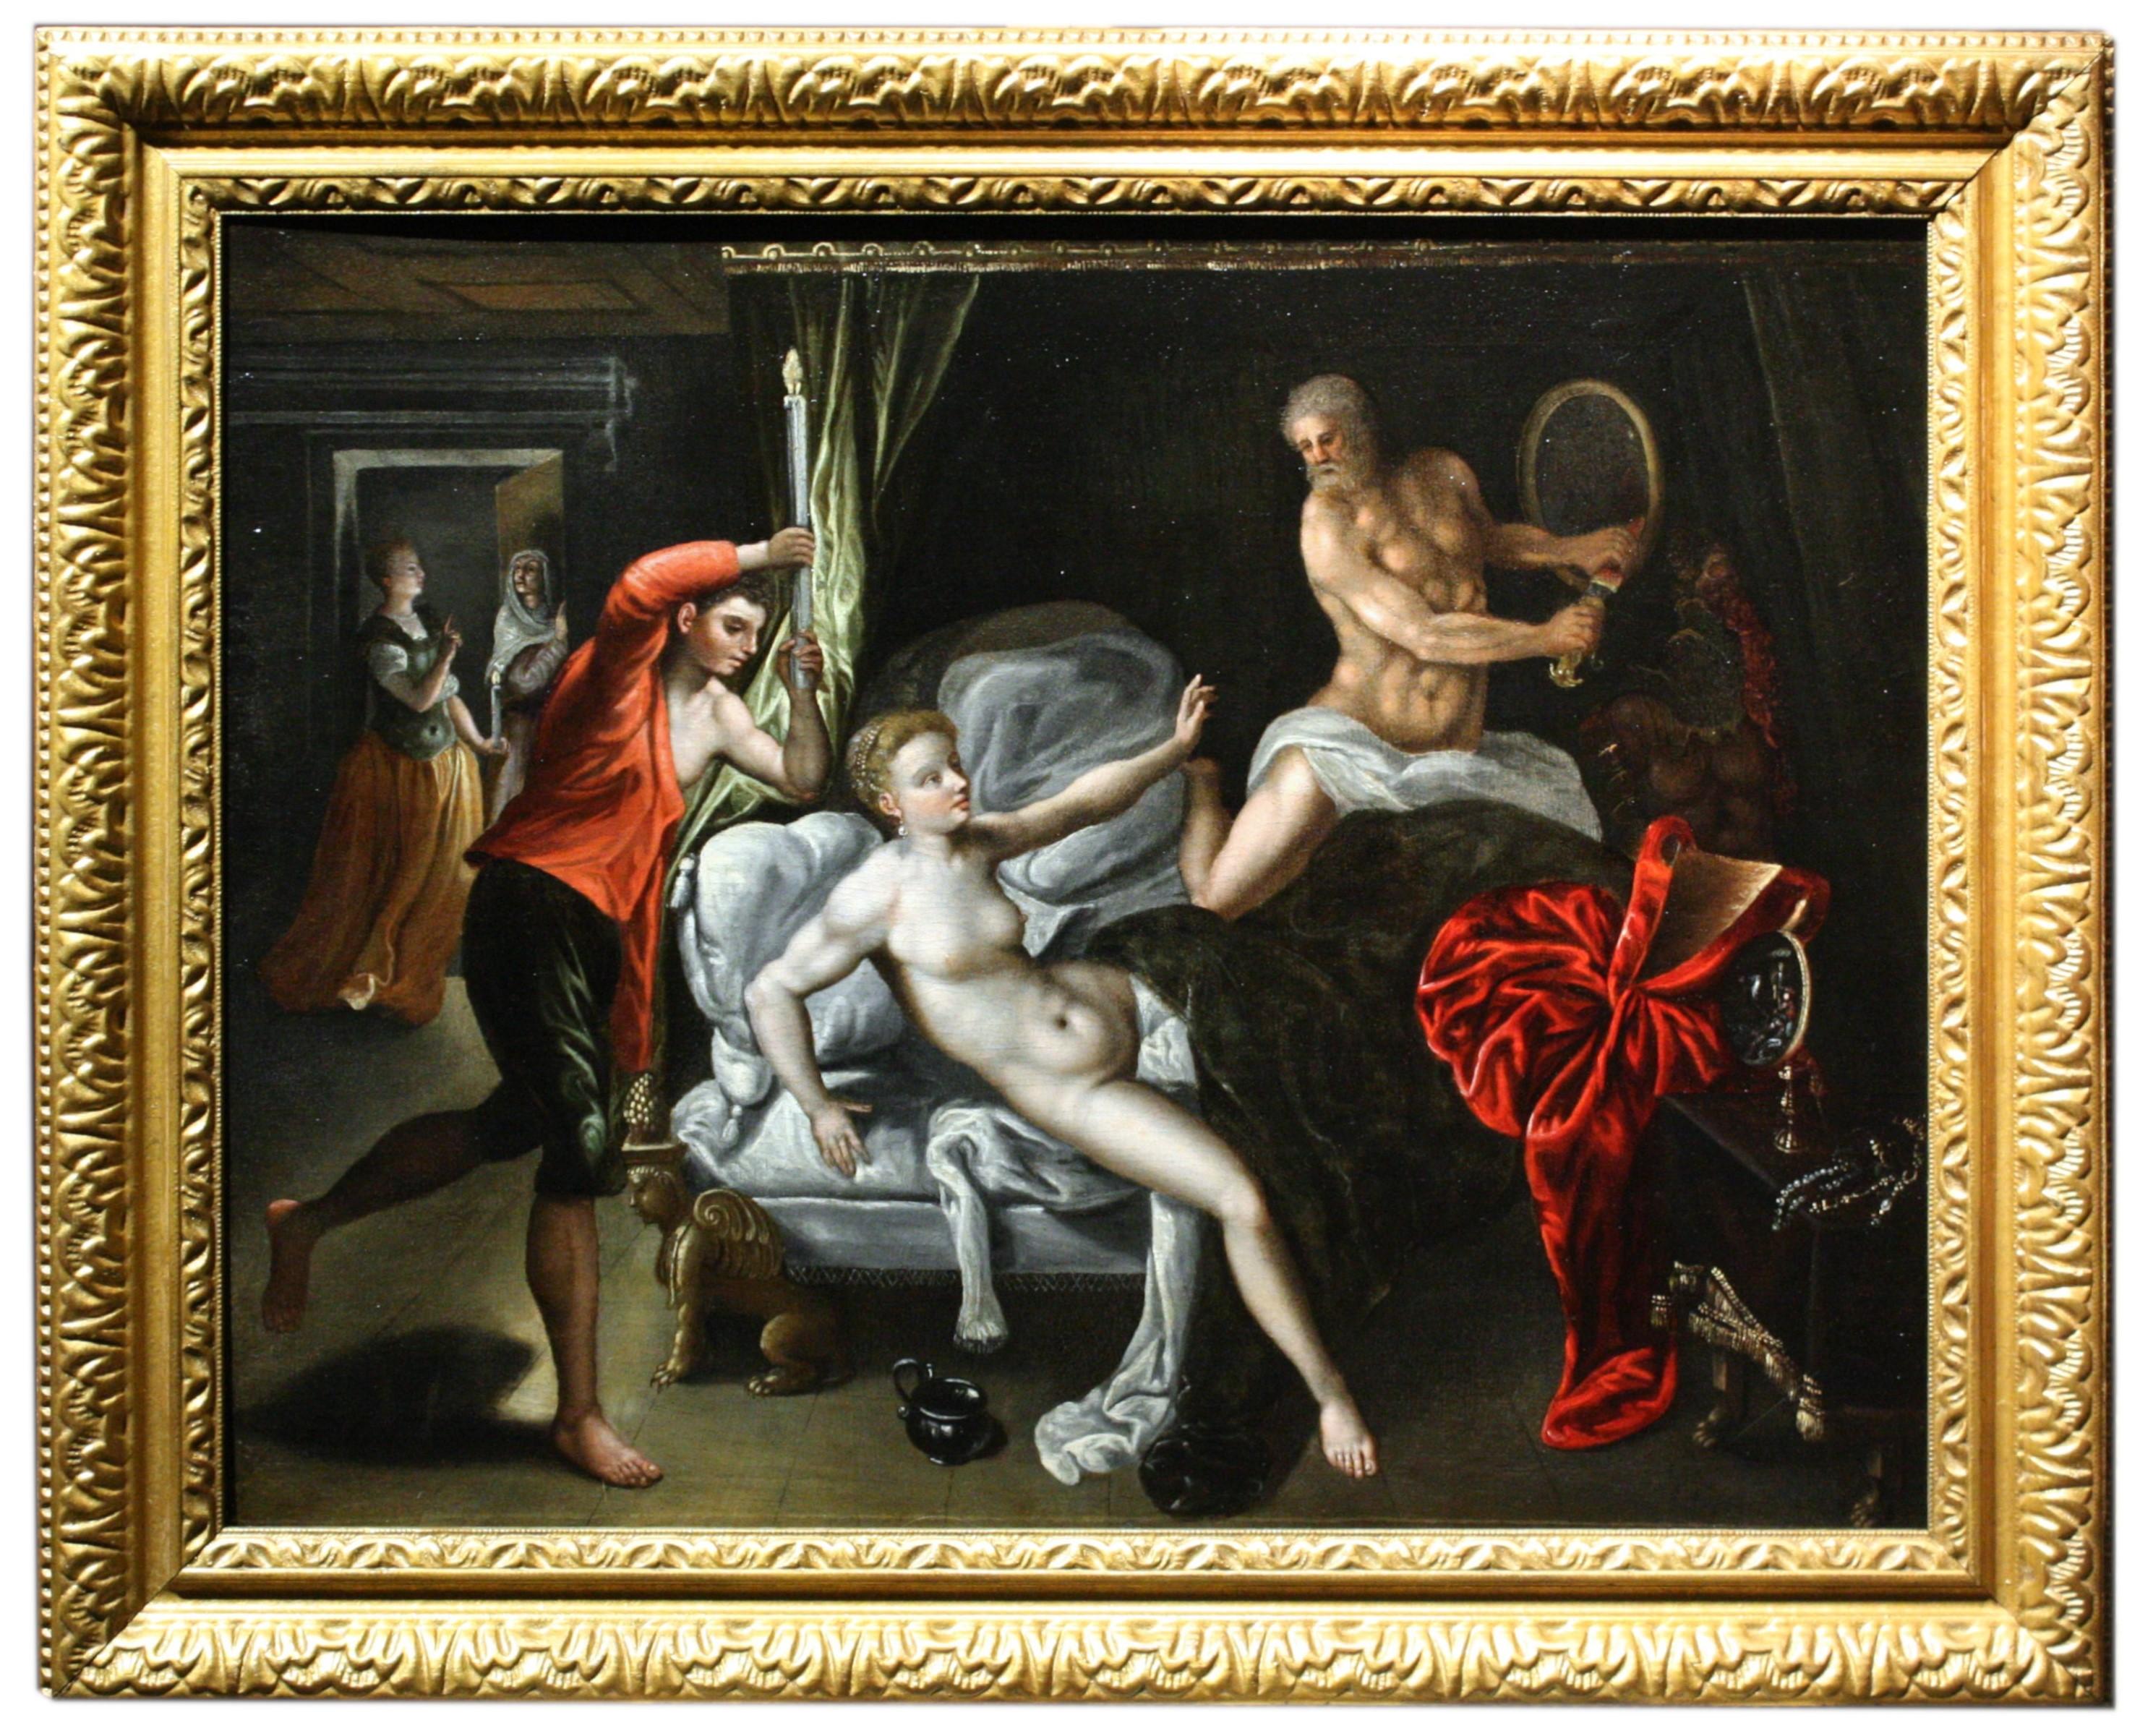 16th c. Flemish school, Renaissance, c. 1580, Venus and Mars surprised by Vulcan - Painting by Jacob de Backer